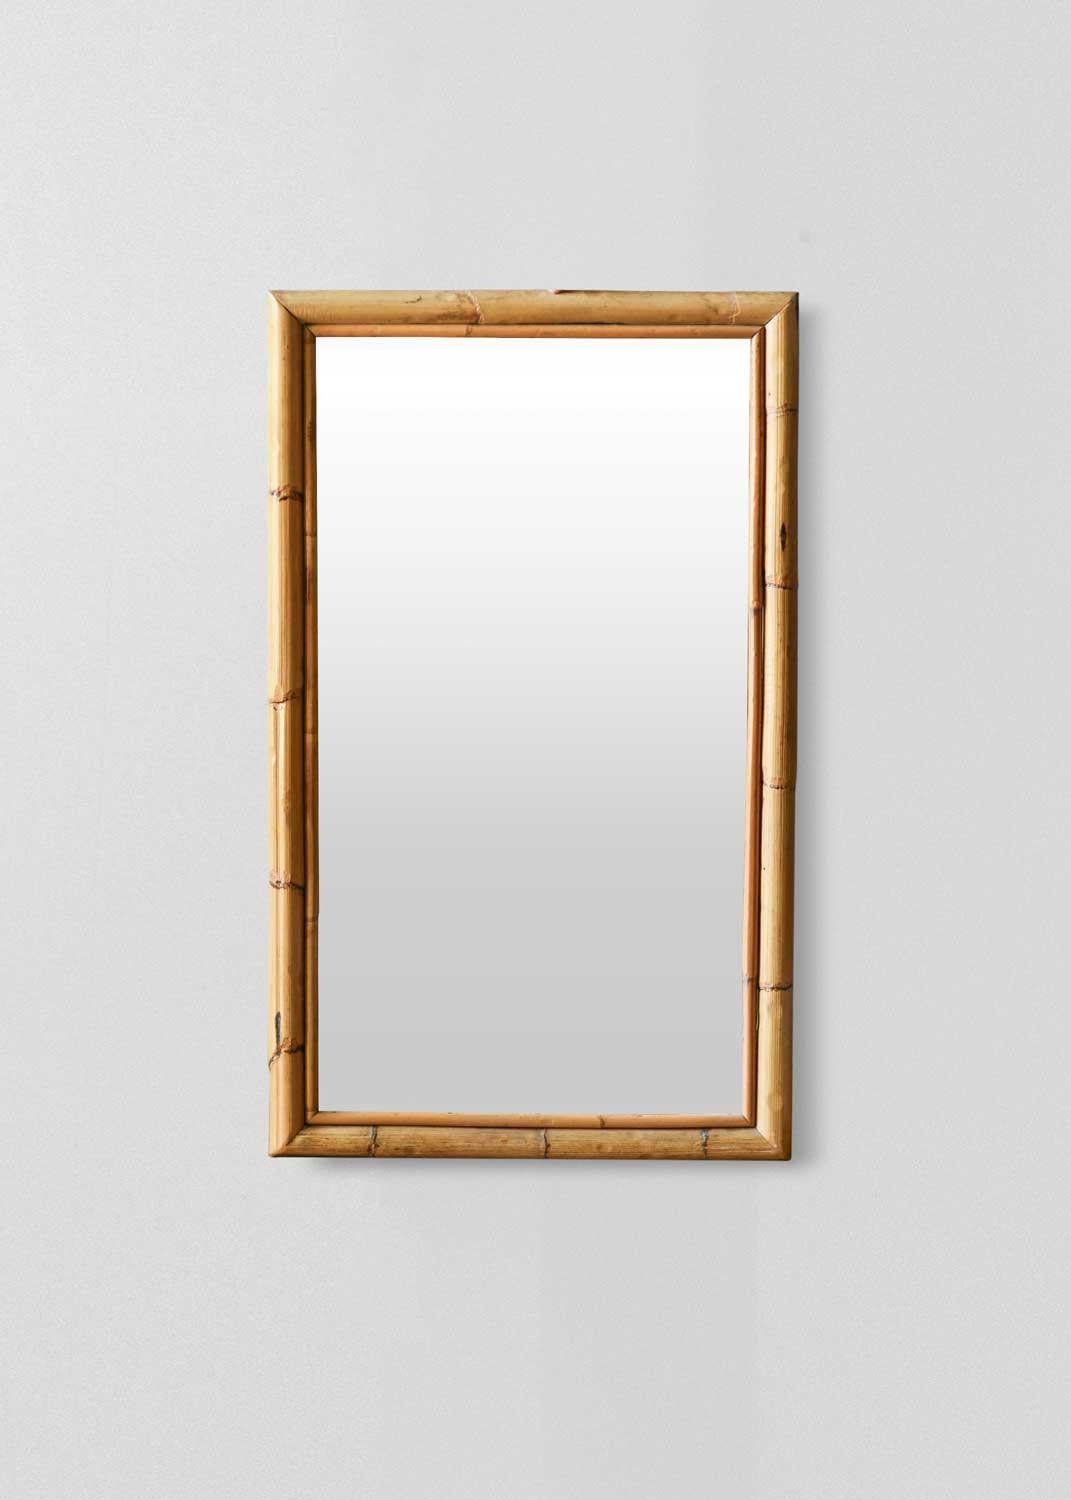 Rectangular bamboo mirror, 1980s
Dimensions: 60 W x 100 H x 4 D cm